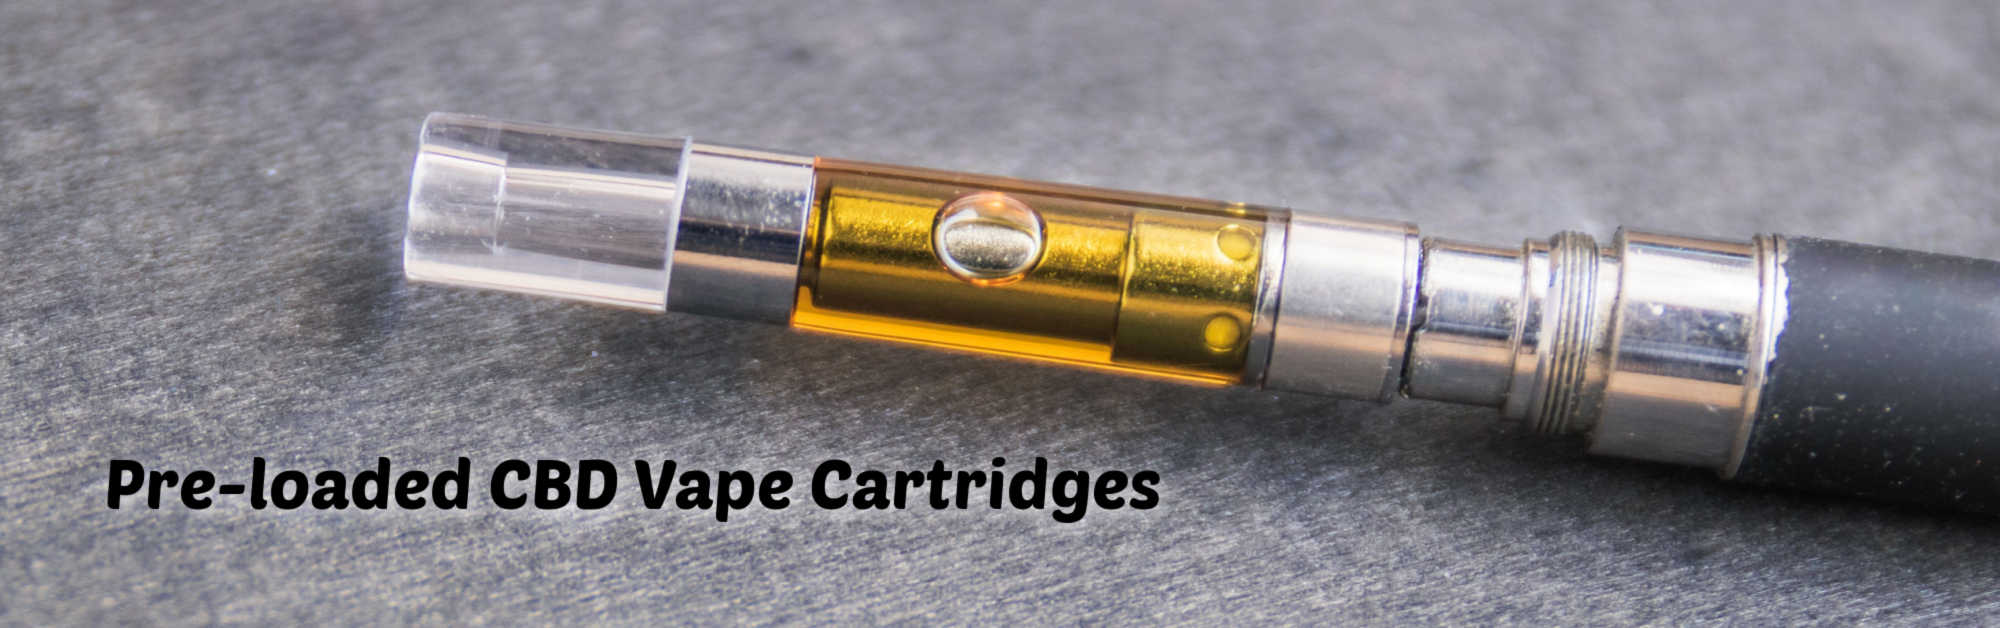 image of pre loaded cbd vape cartridges